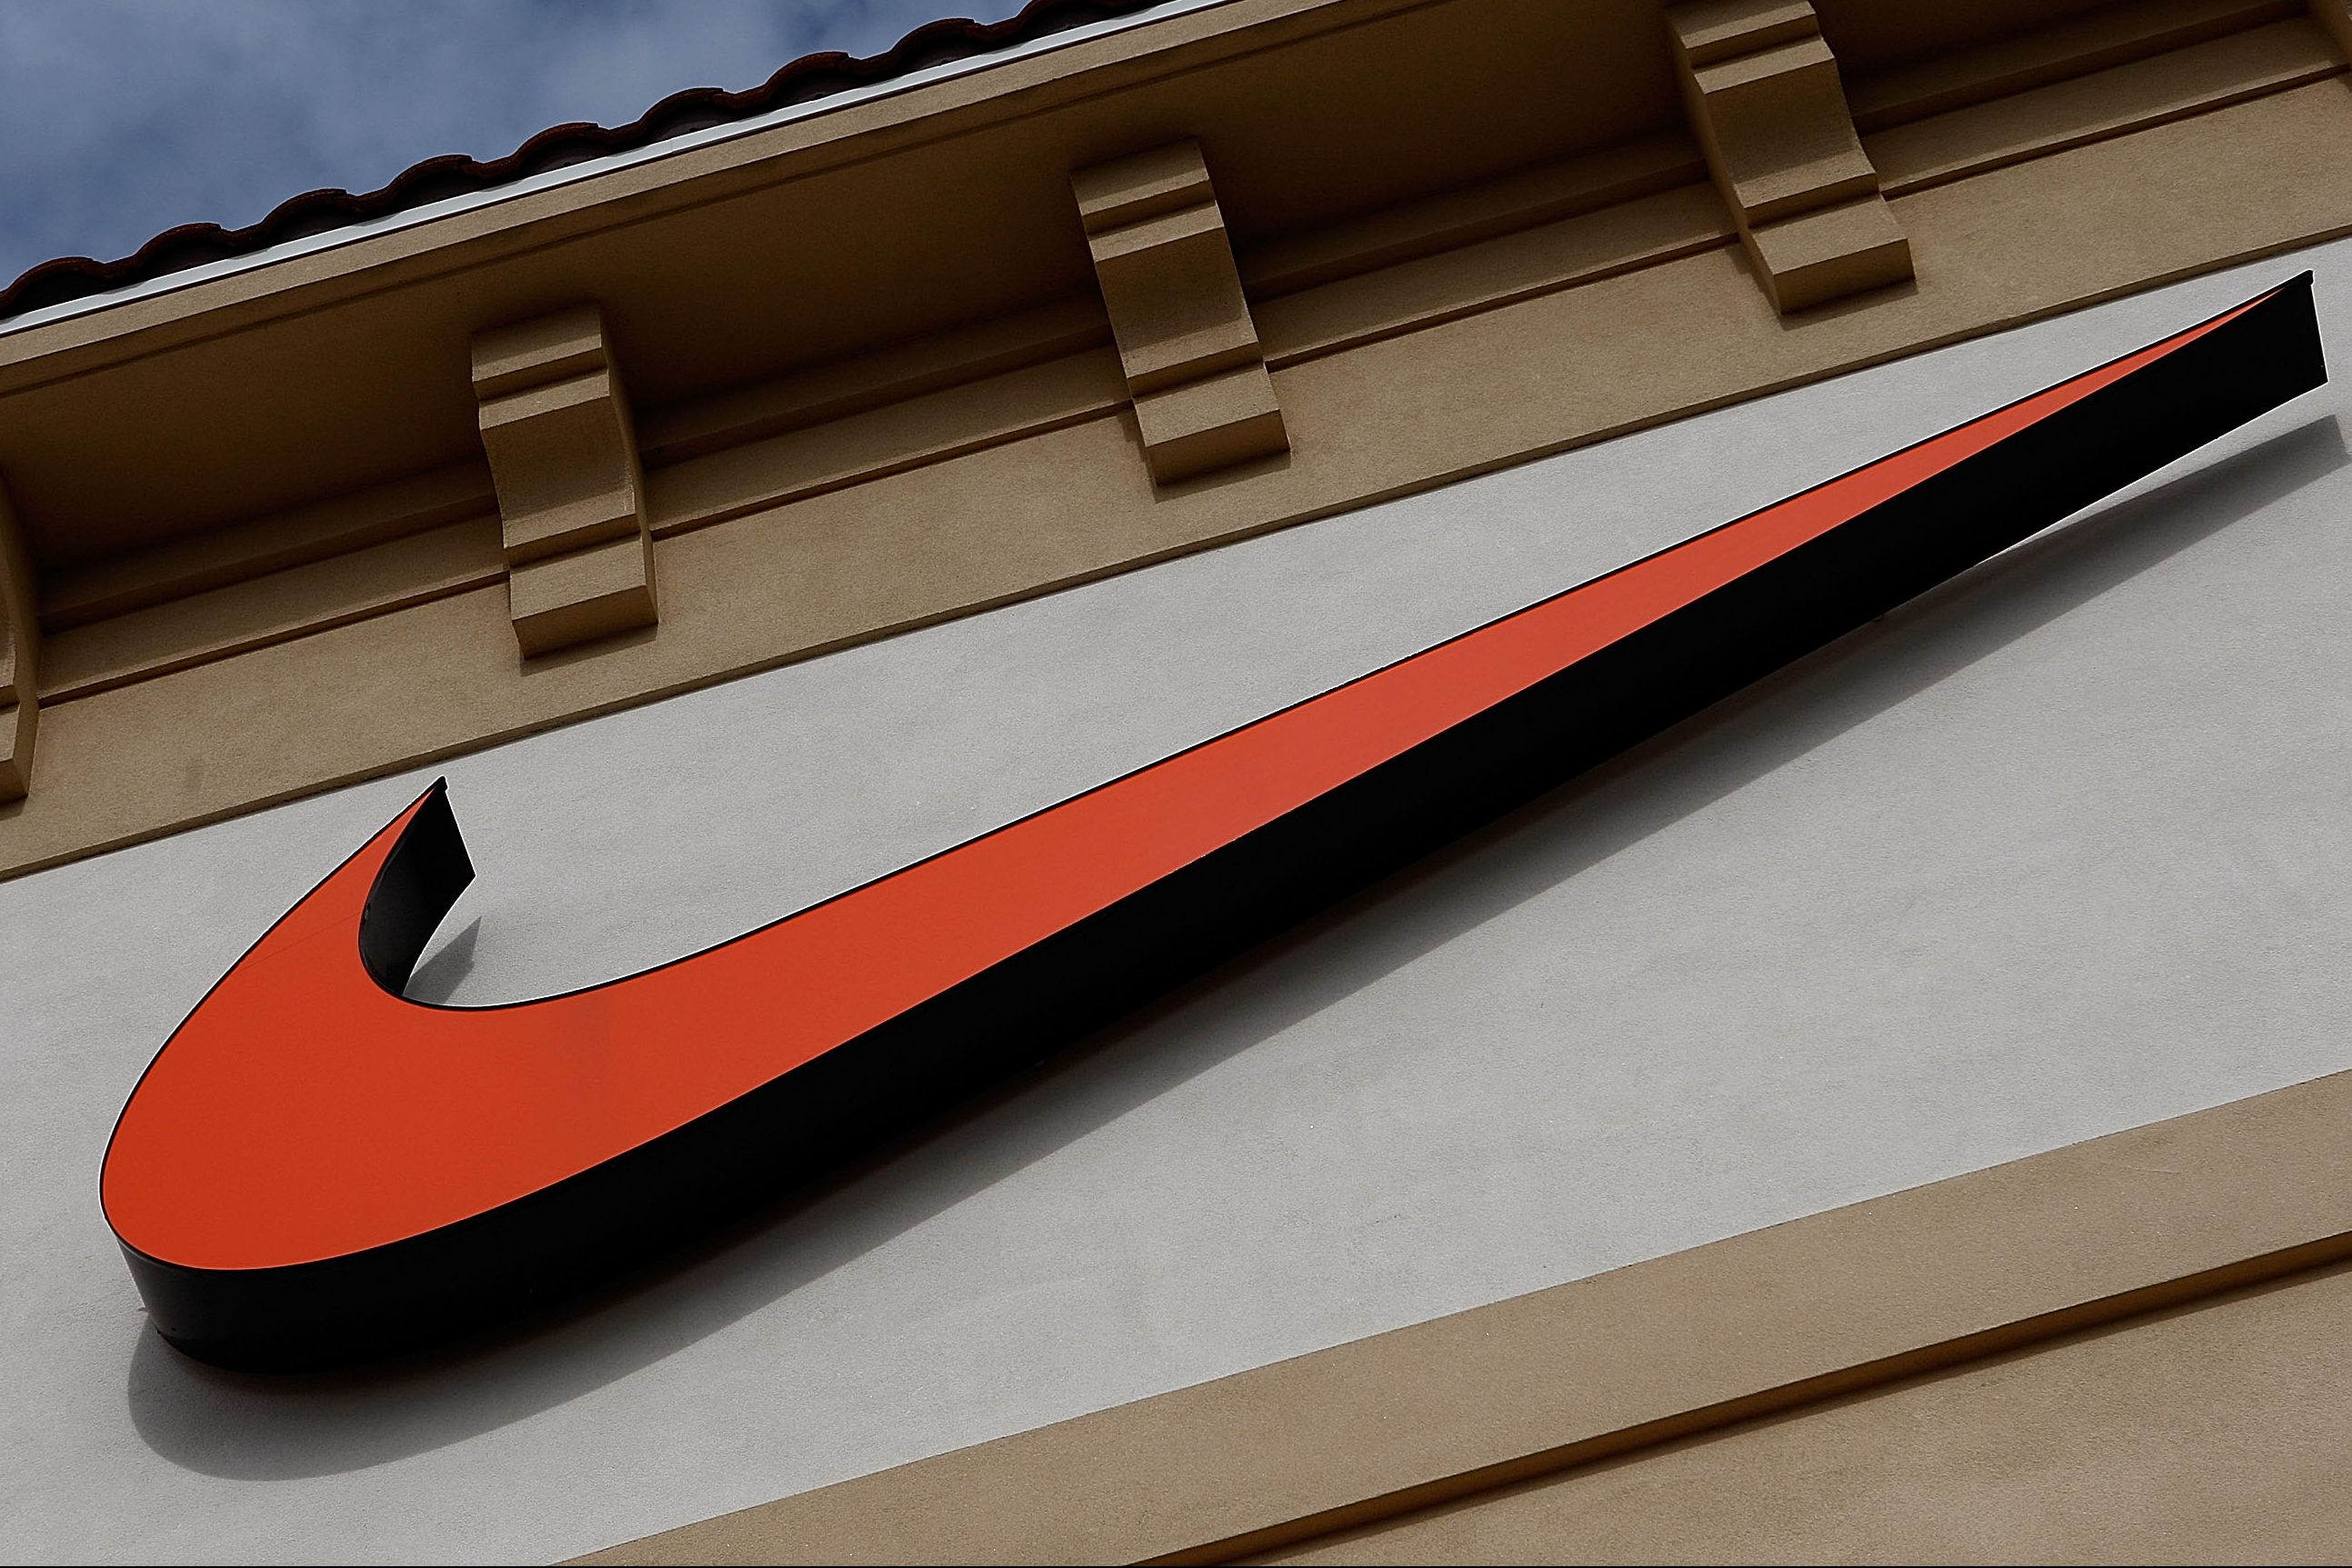 New Nike Refurbished Program Will Resell Used Sneakers Insidehook